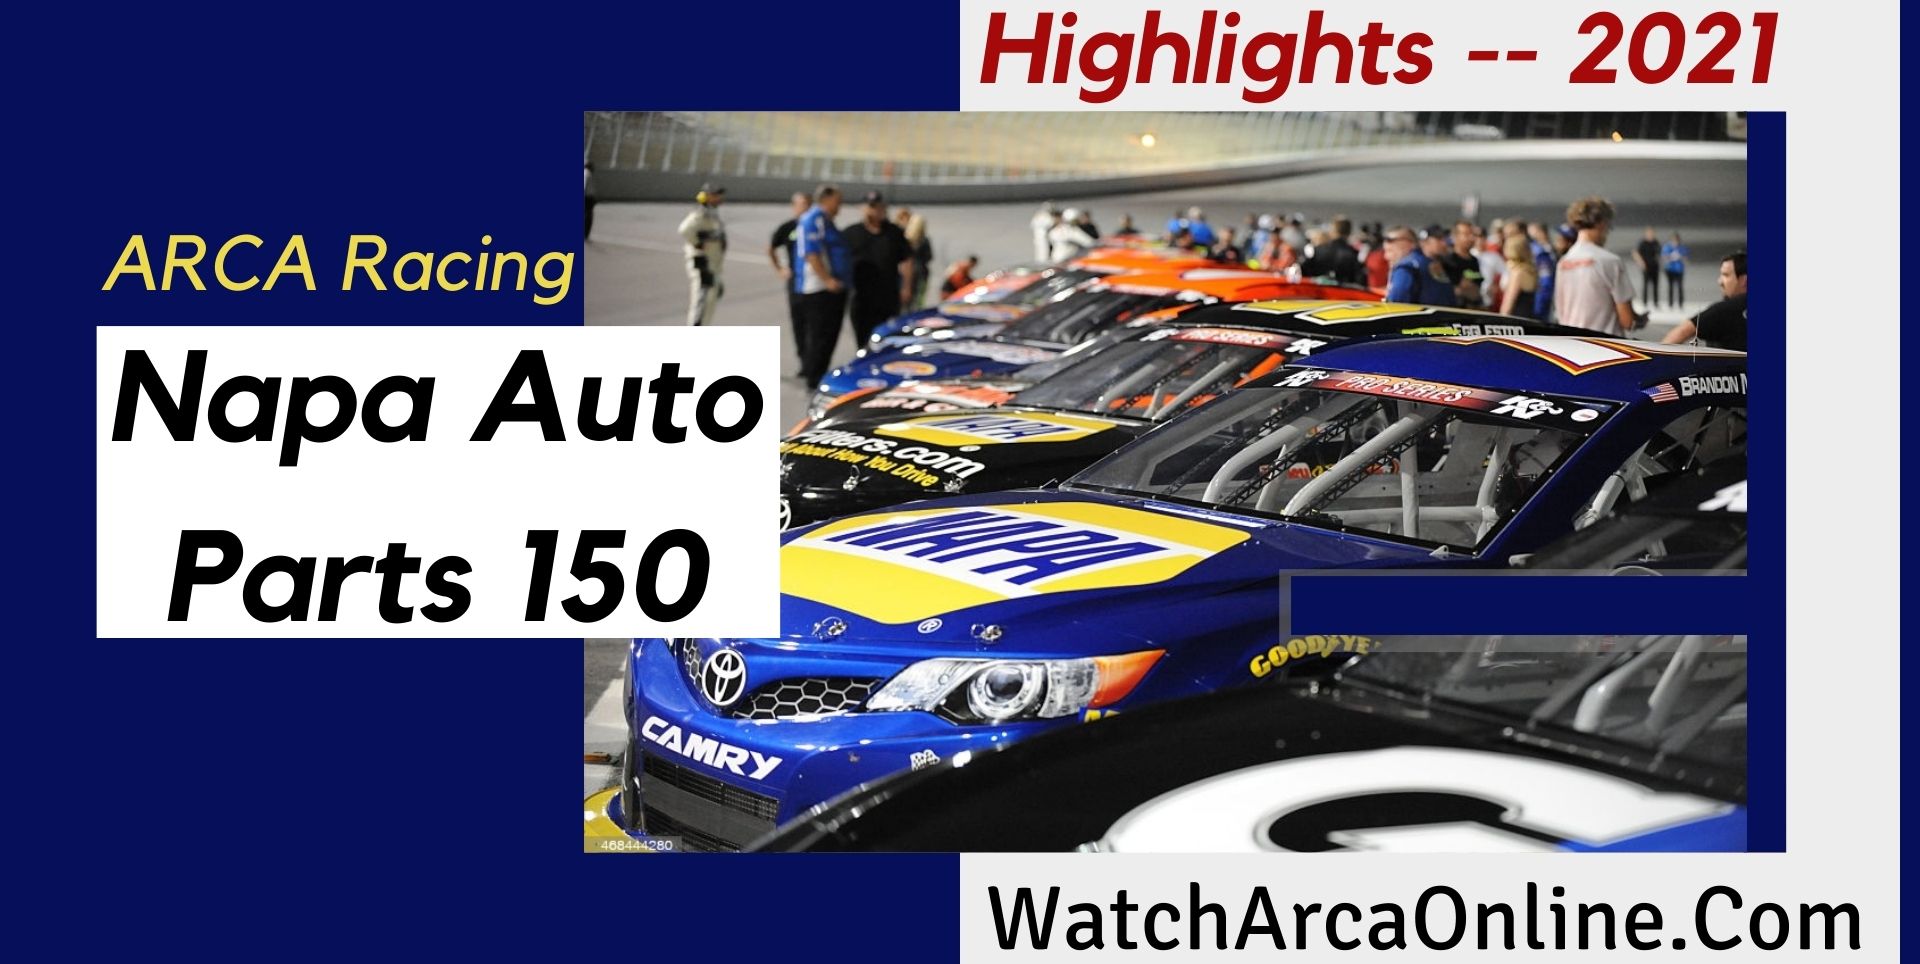 Napa Auto Parts 150 ARCA Racing Highlights 2021